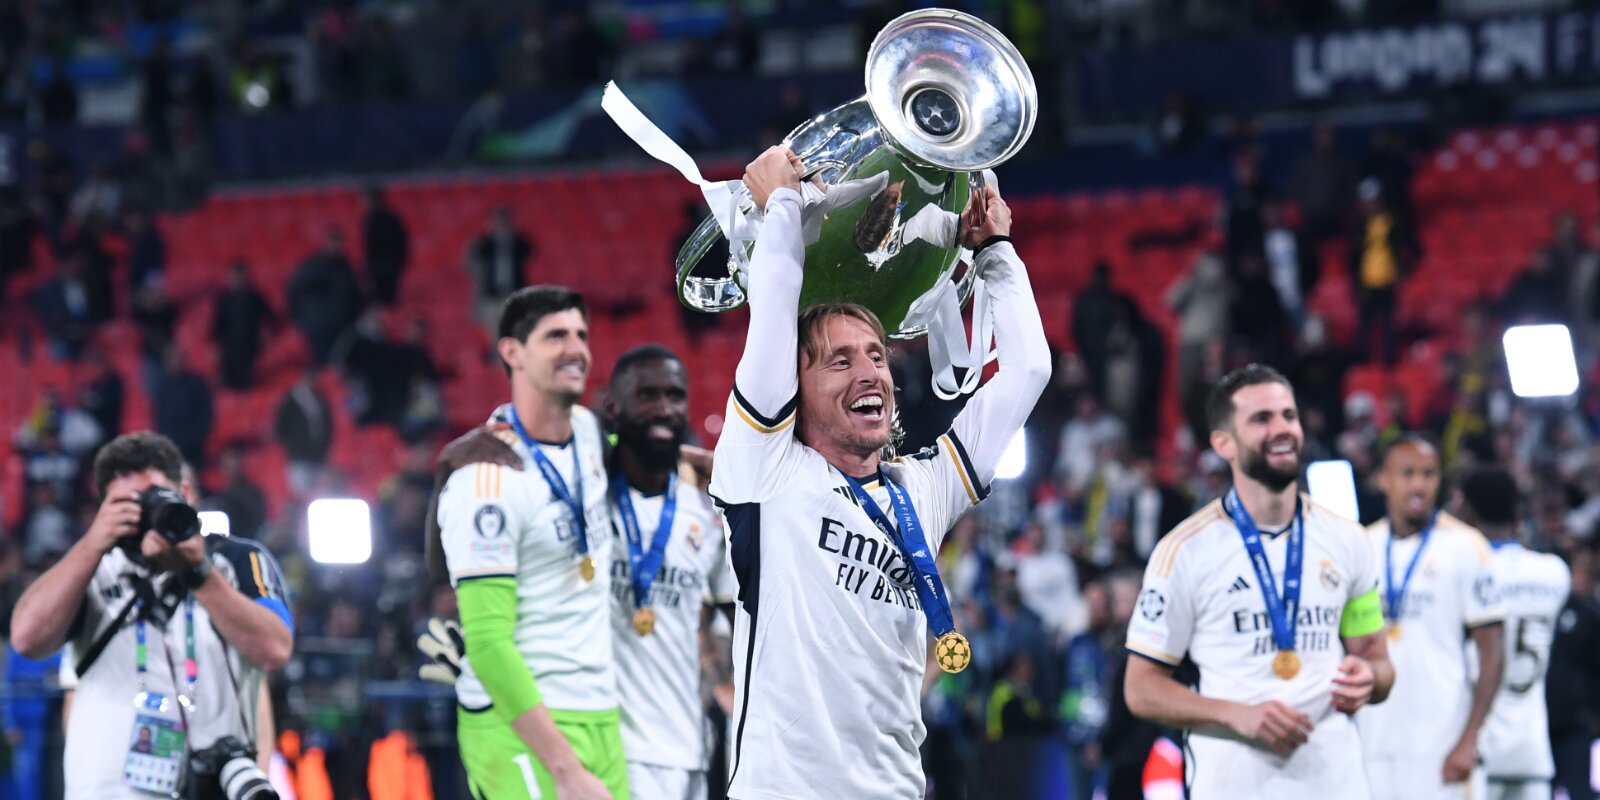 Real Madrid gewënnst d'Champions League